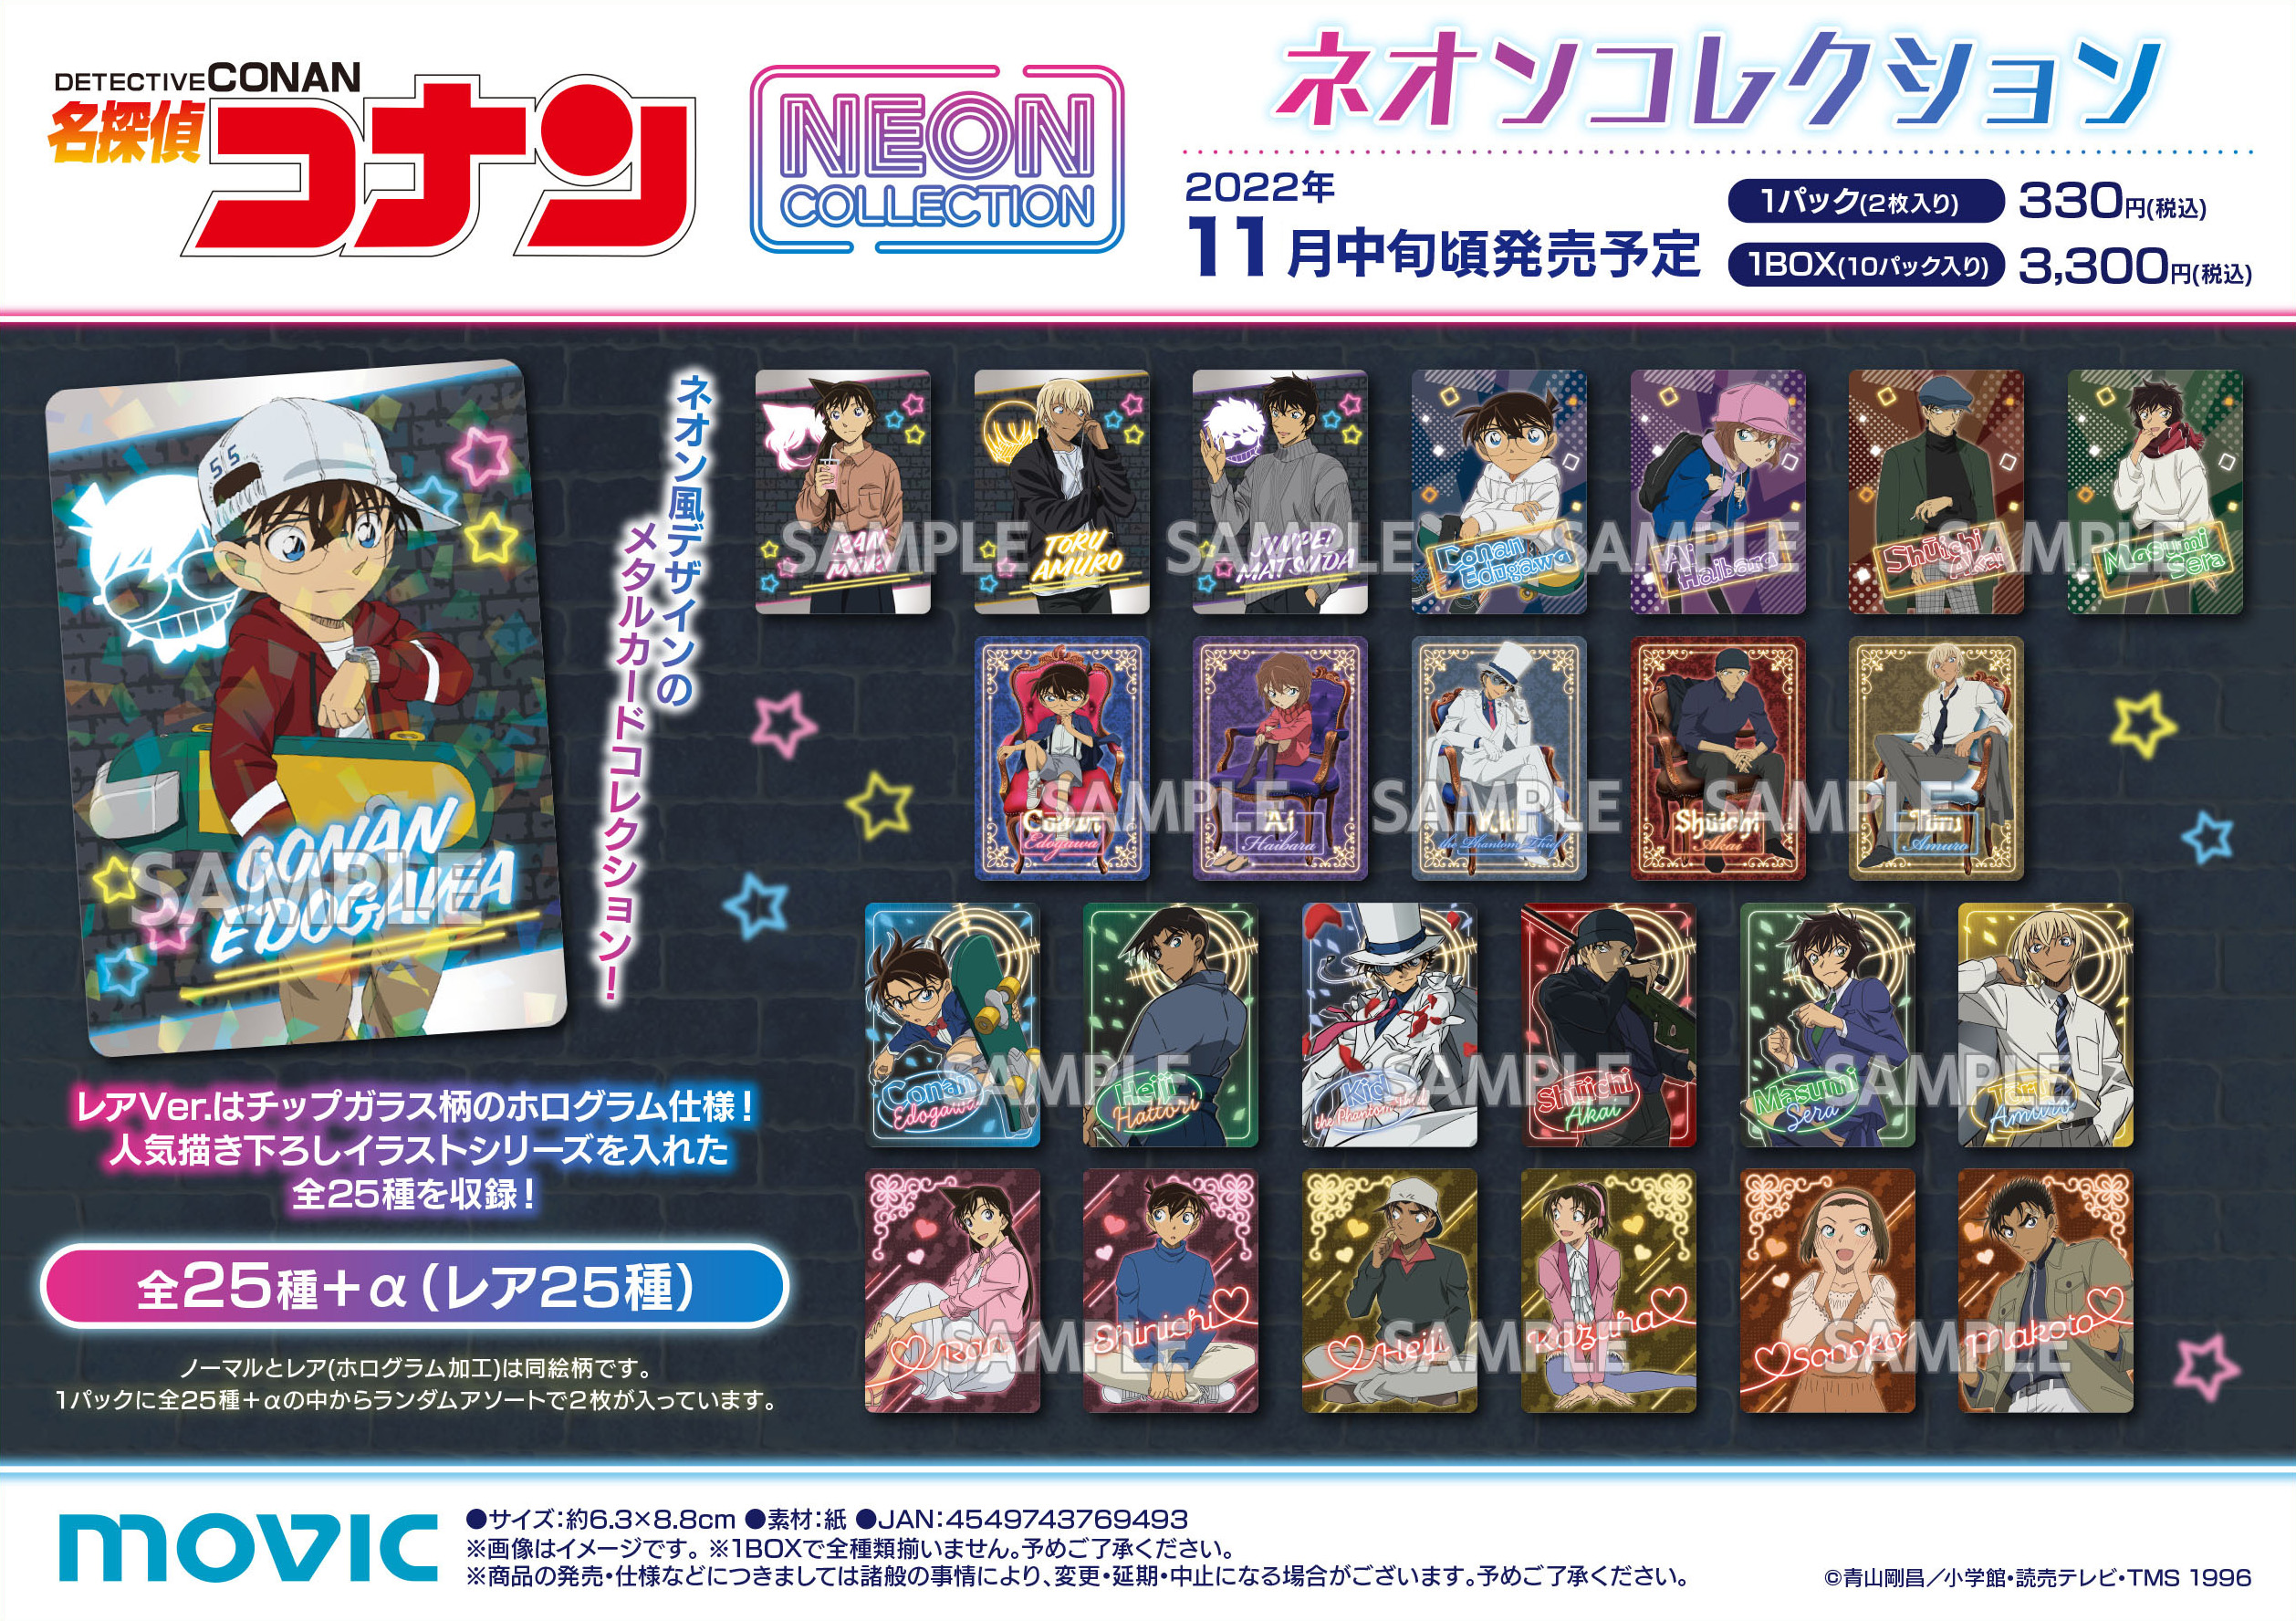 Tvアニメ 名探偵コナン より ネオン風デザインのメタルカード ネオンコレクション が登場 株式会社アニメイトホールディングスのプレスリリース